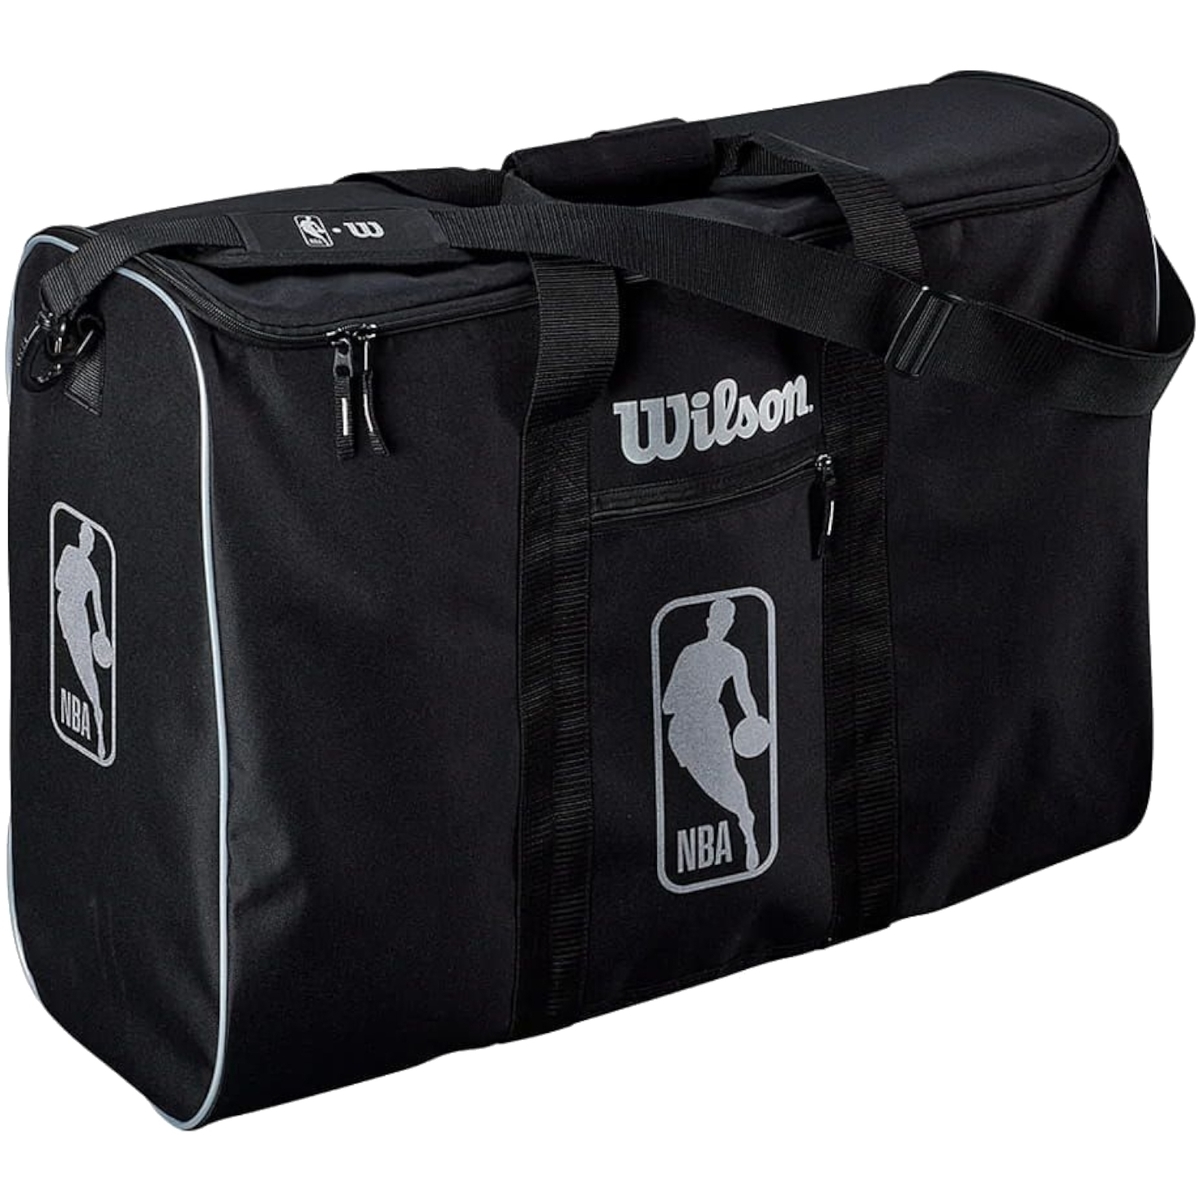 Malas pre-owned Amazon crossbody bag Wilson NBA Authentic 6 Ball Bag Preto